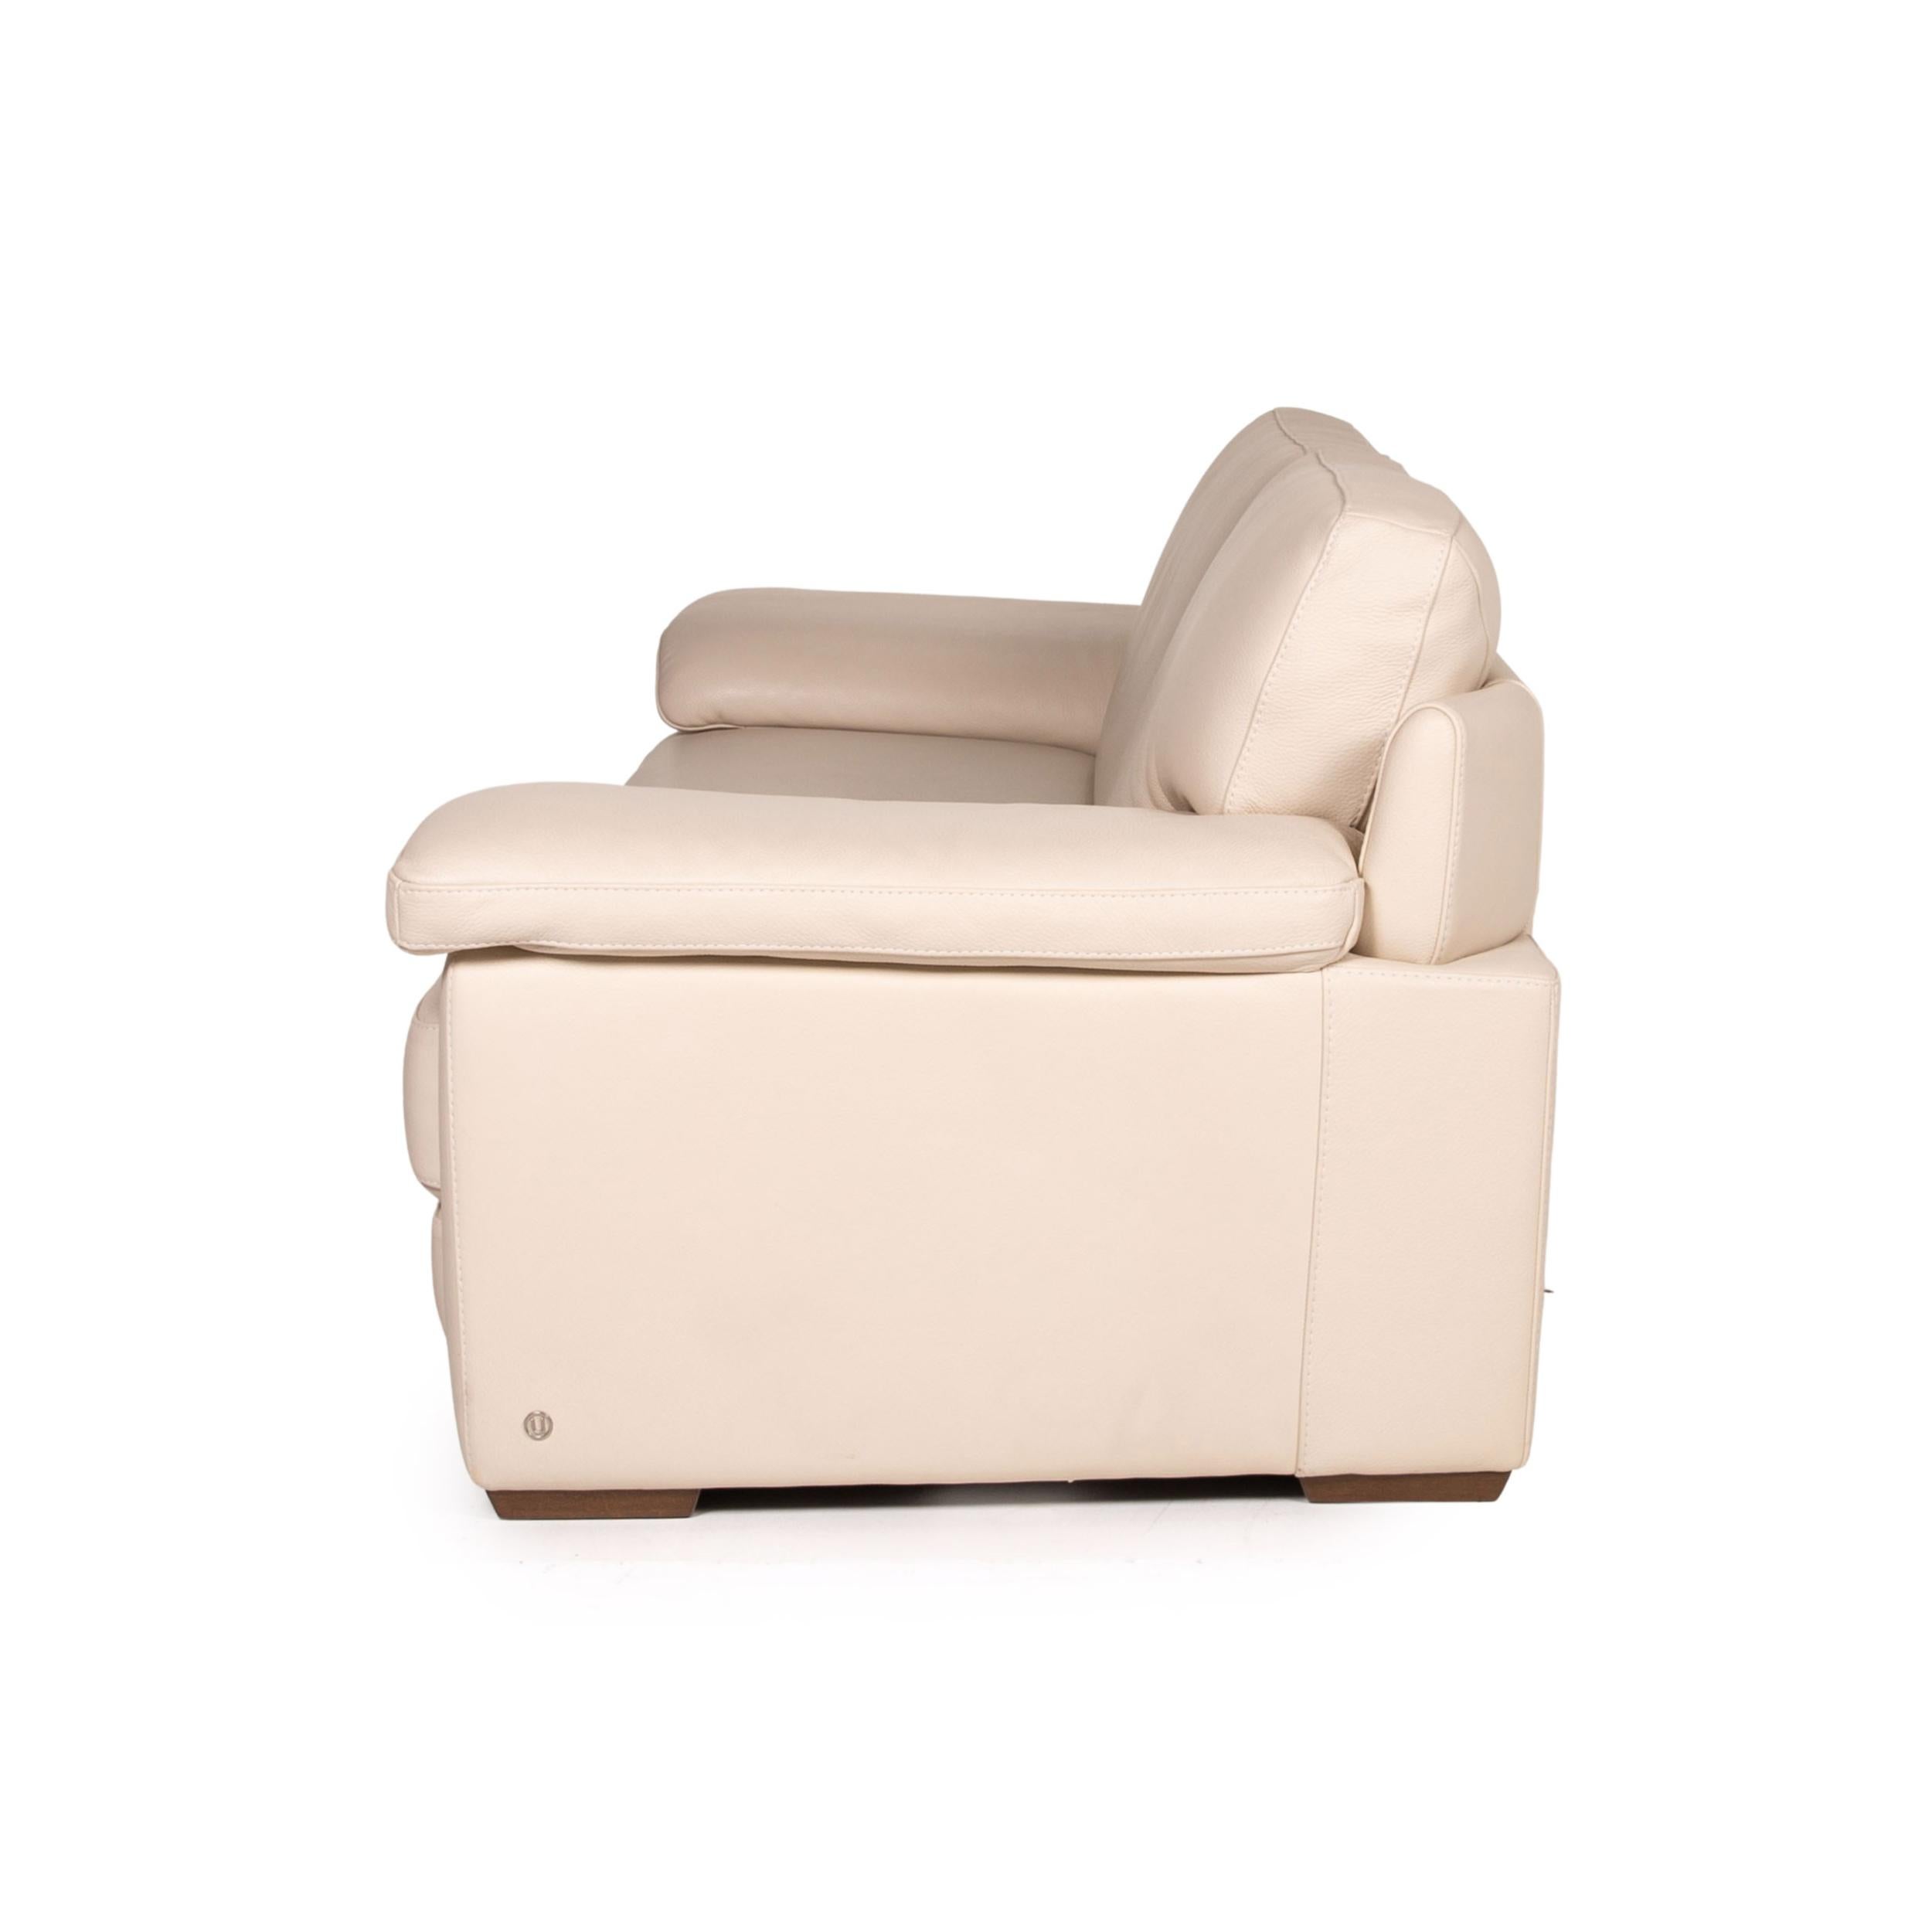 Natuzzi 2198 Leather Sofa Cream Three-Seater Couch 1